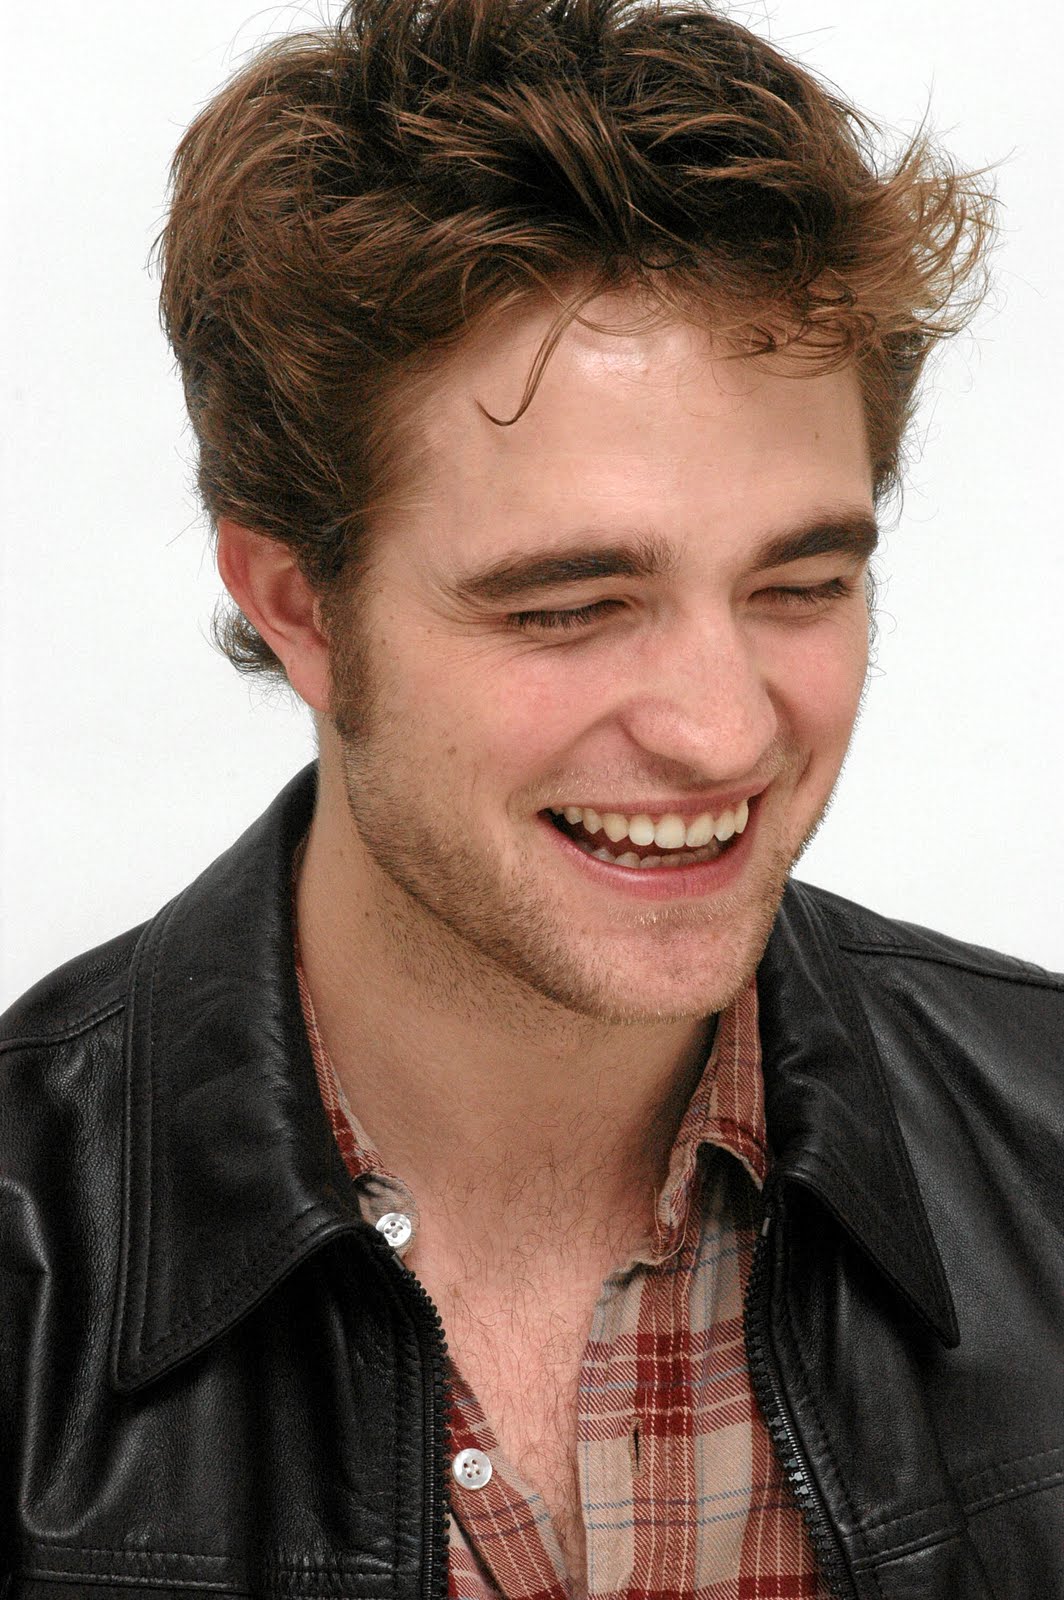 Robert Pattinson News: Robert Pattinson At 'New Moon' Press Conference: UHQ & Untagged